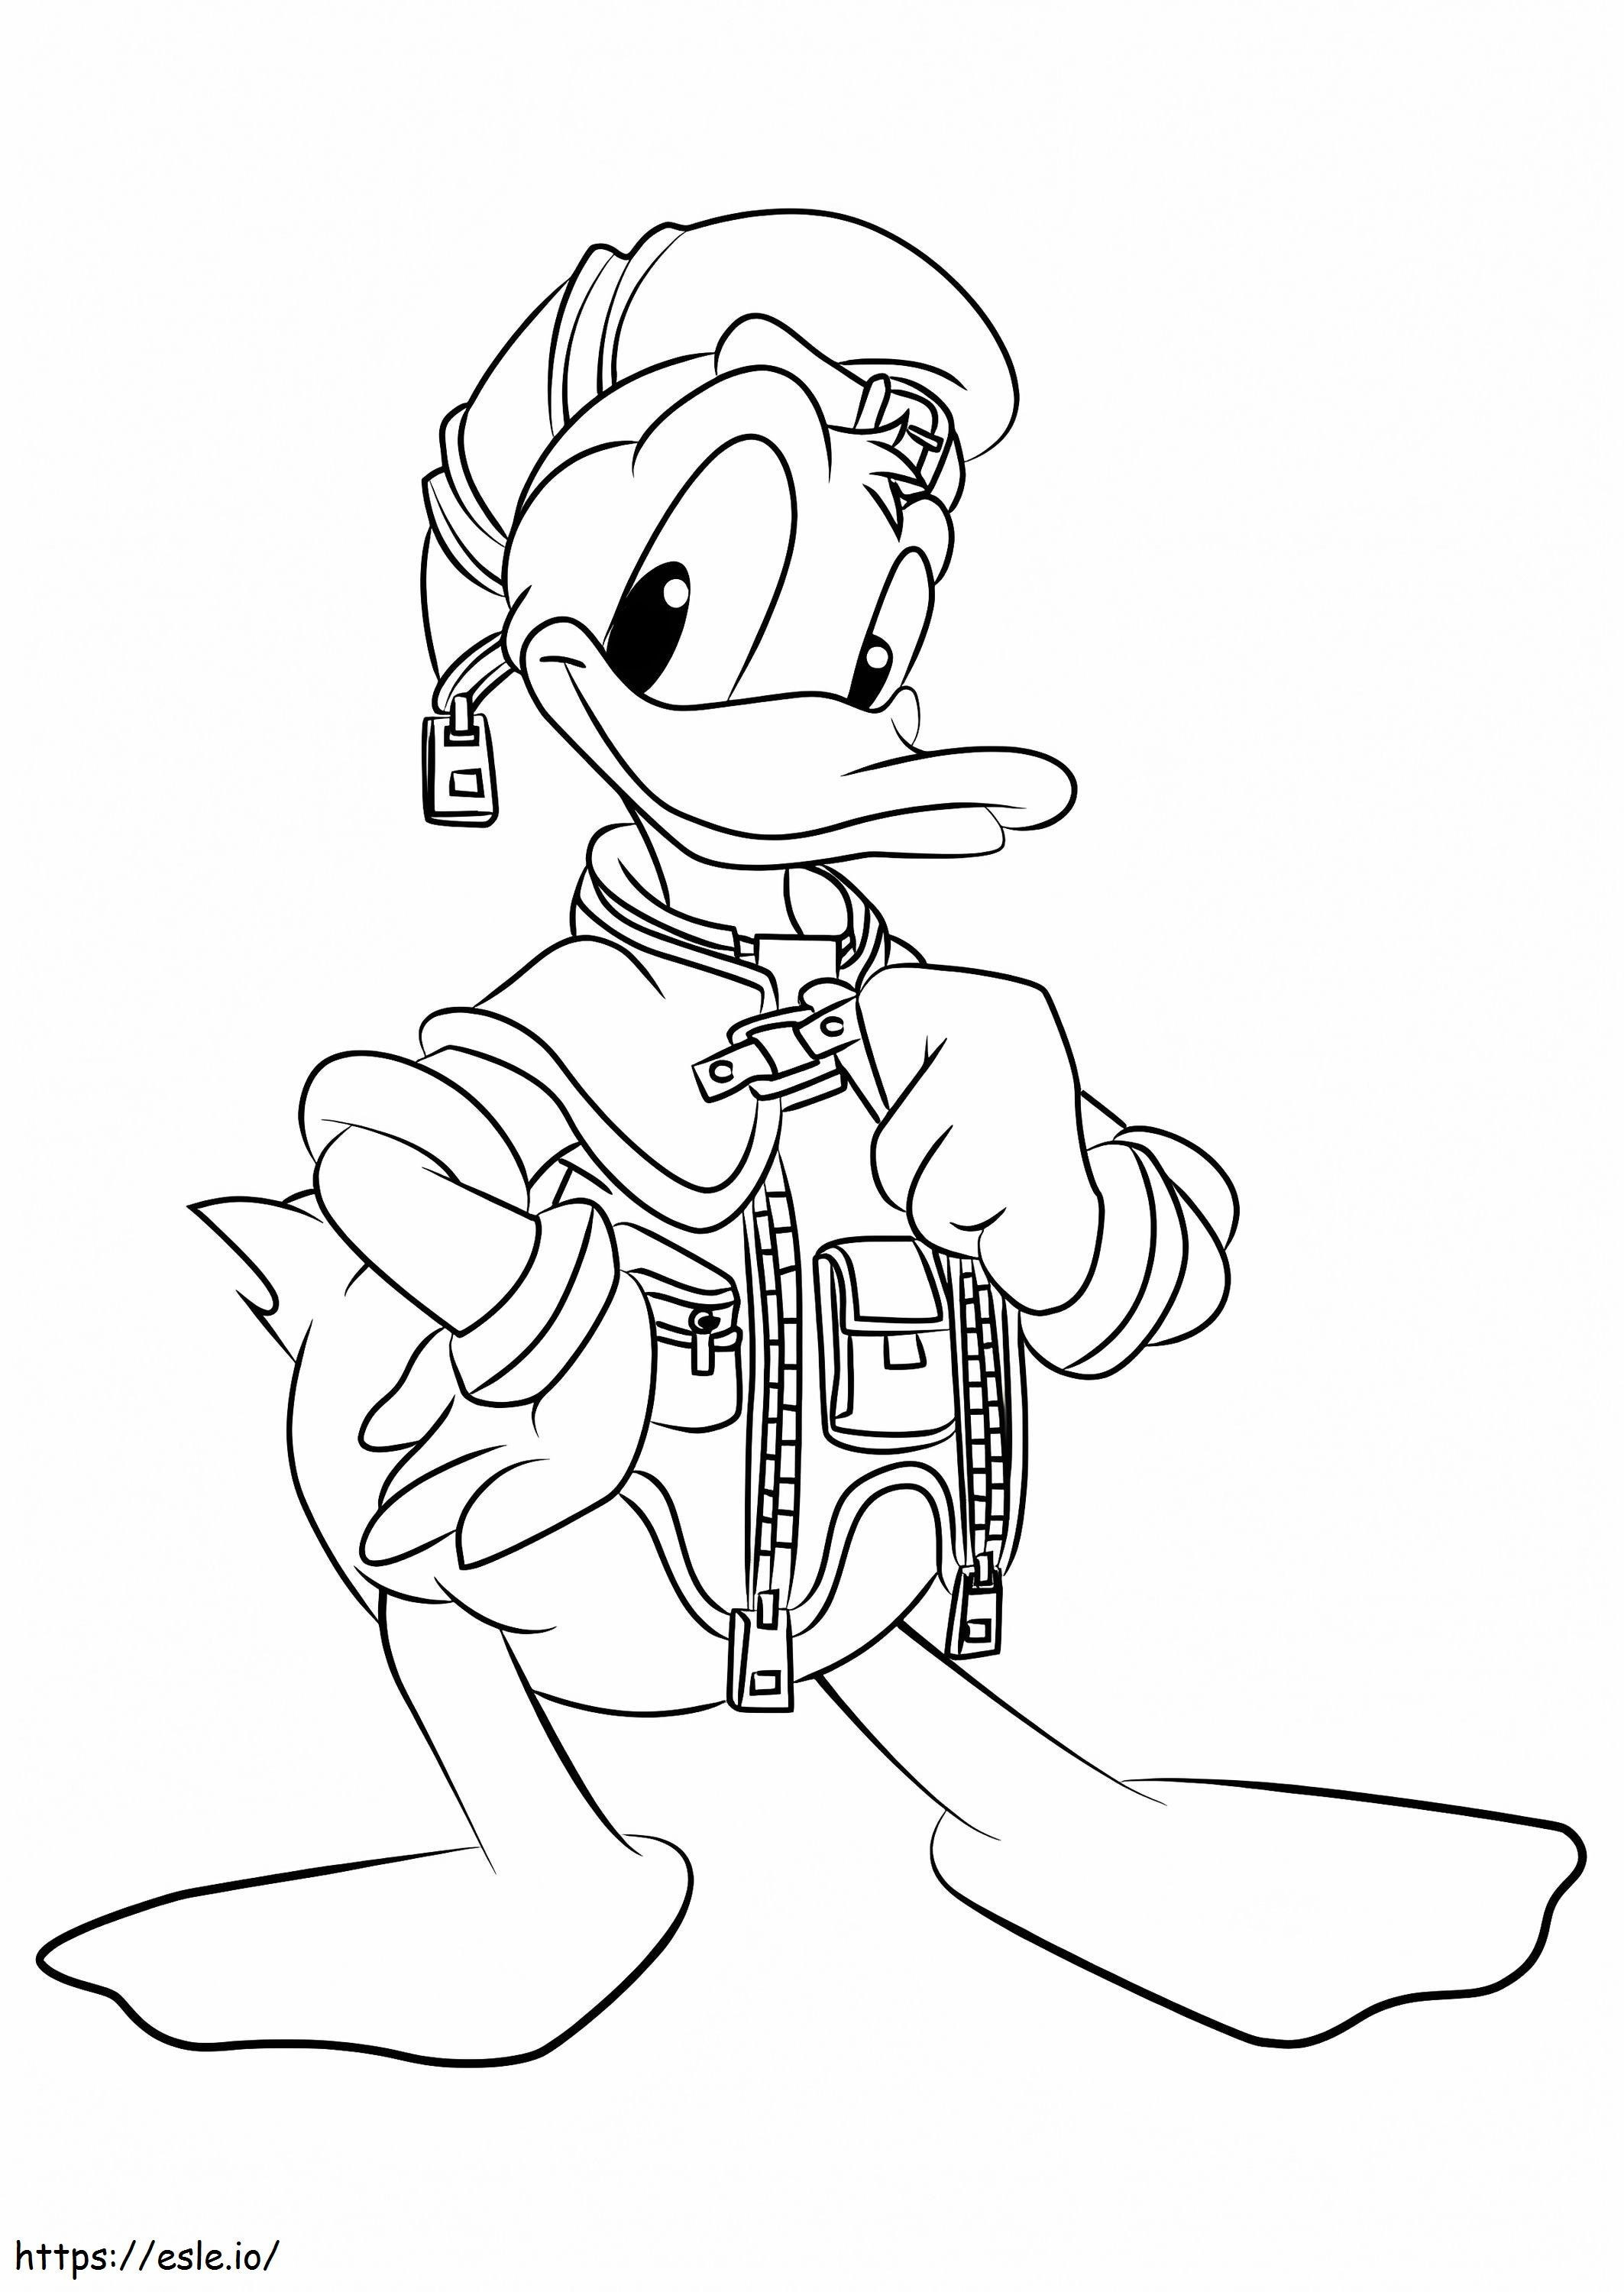 Coloriage Donald Duck de Kingdom Hearts à imprimer dessin